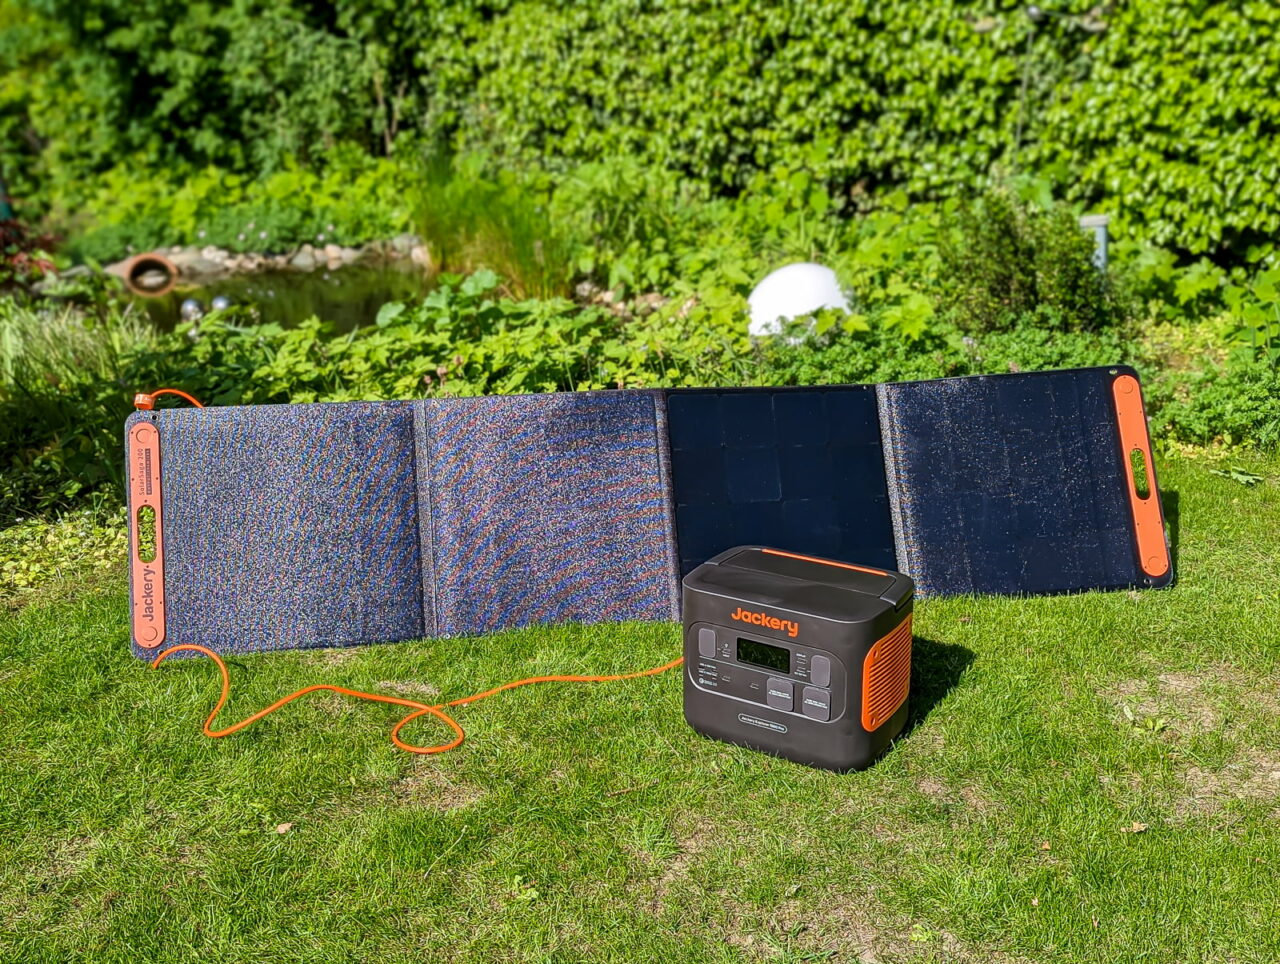 Jackery SolarSaga 200 - Test, Leistung bei Sonne, mittags, maximaler Strom, Höchstleistung, Solargenerator, mit Powerstation Jackery Explorer 1500 Pro